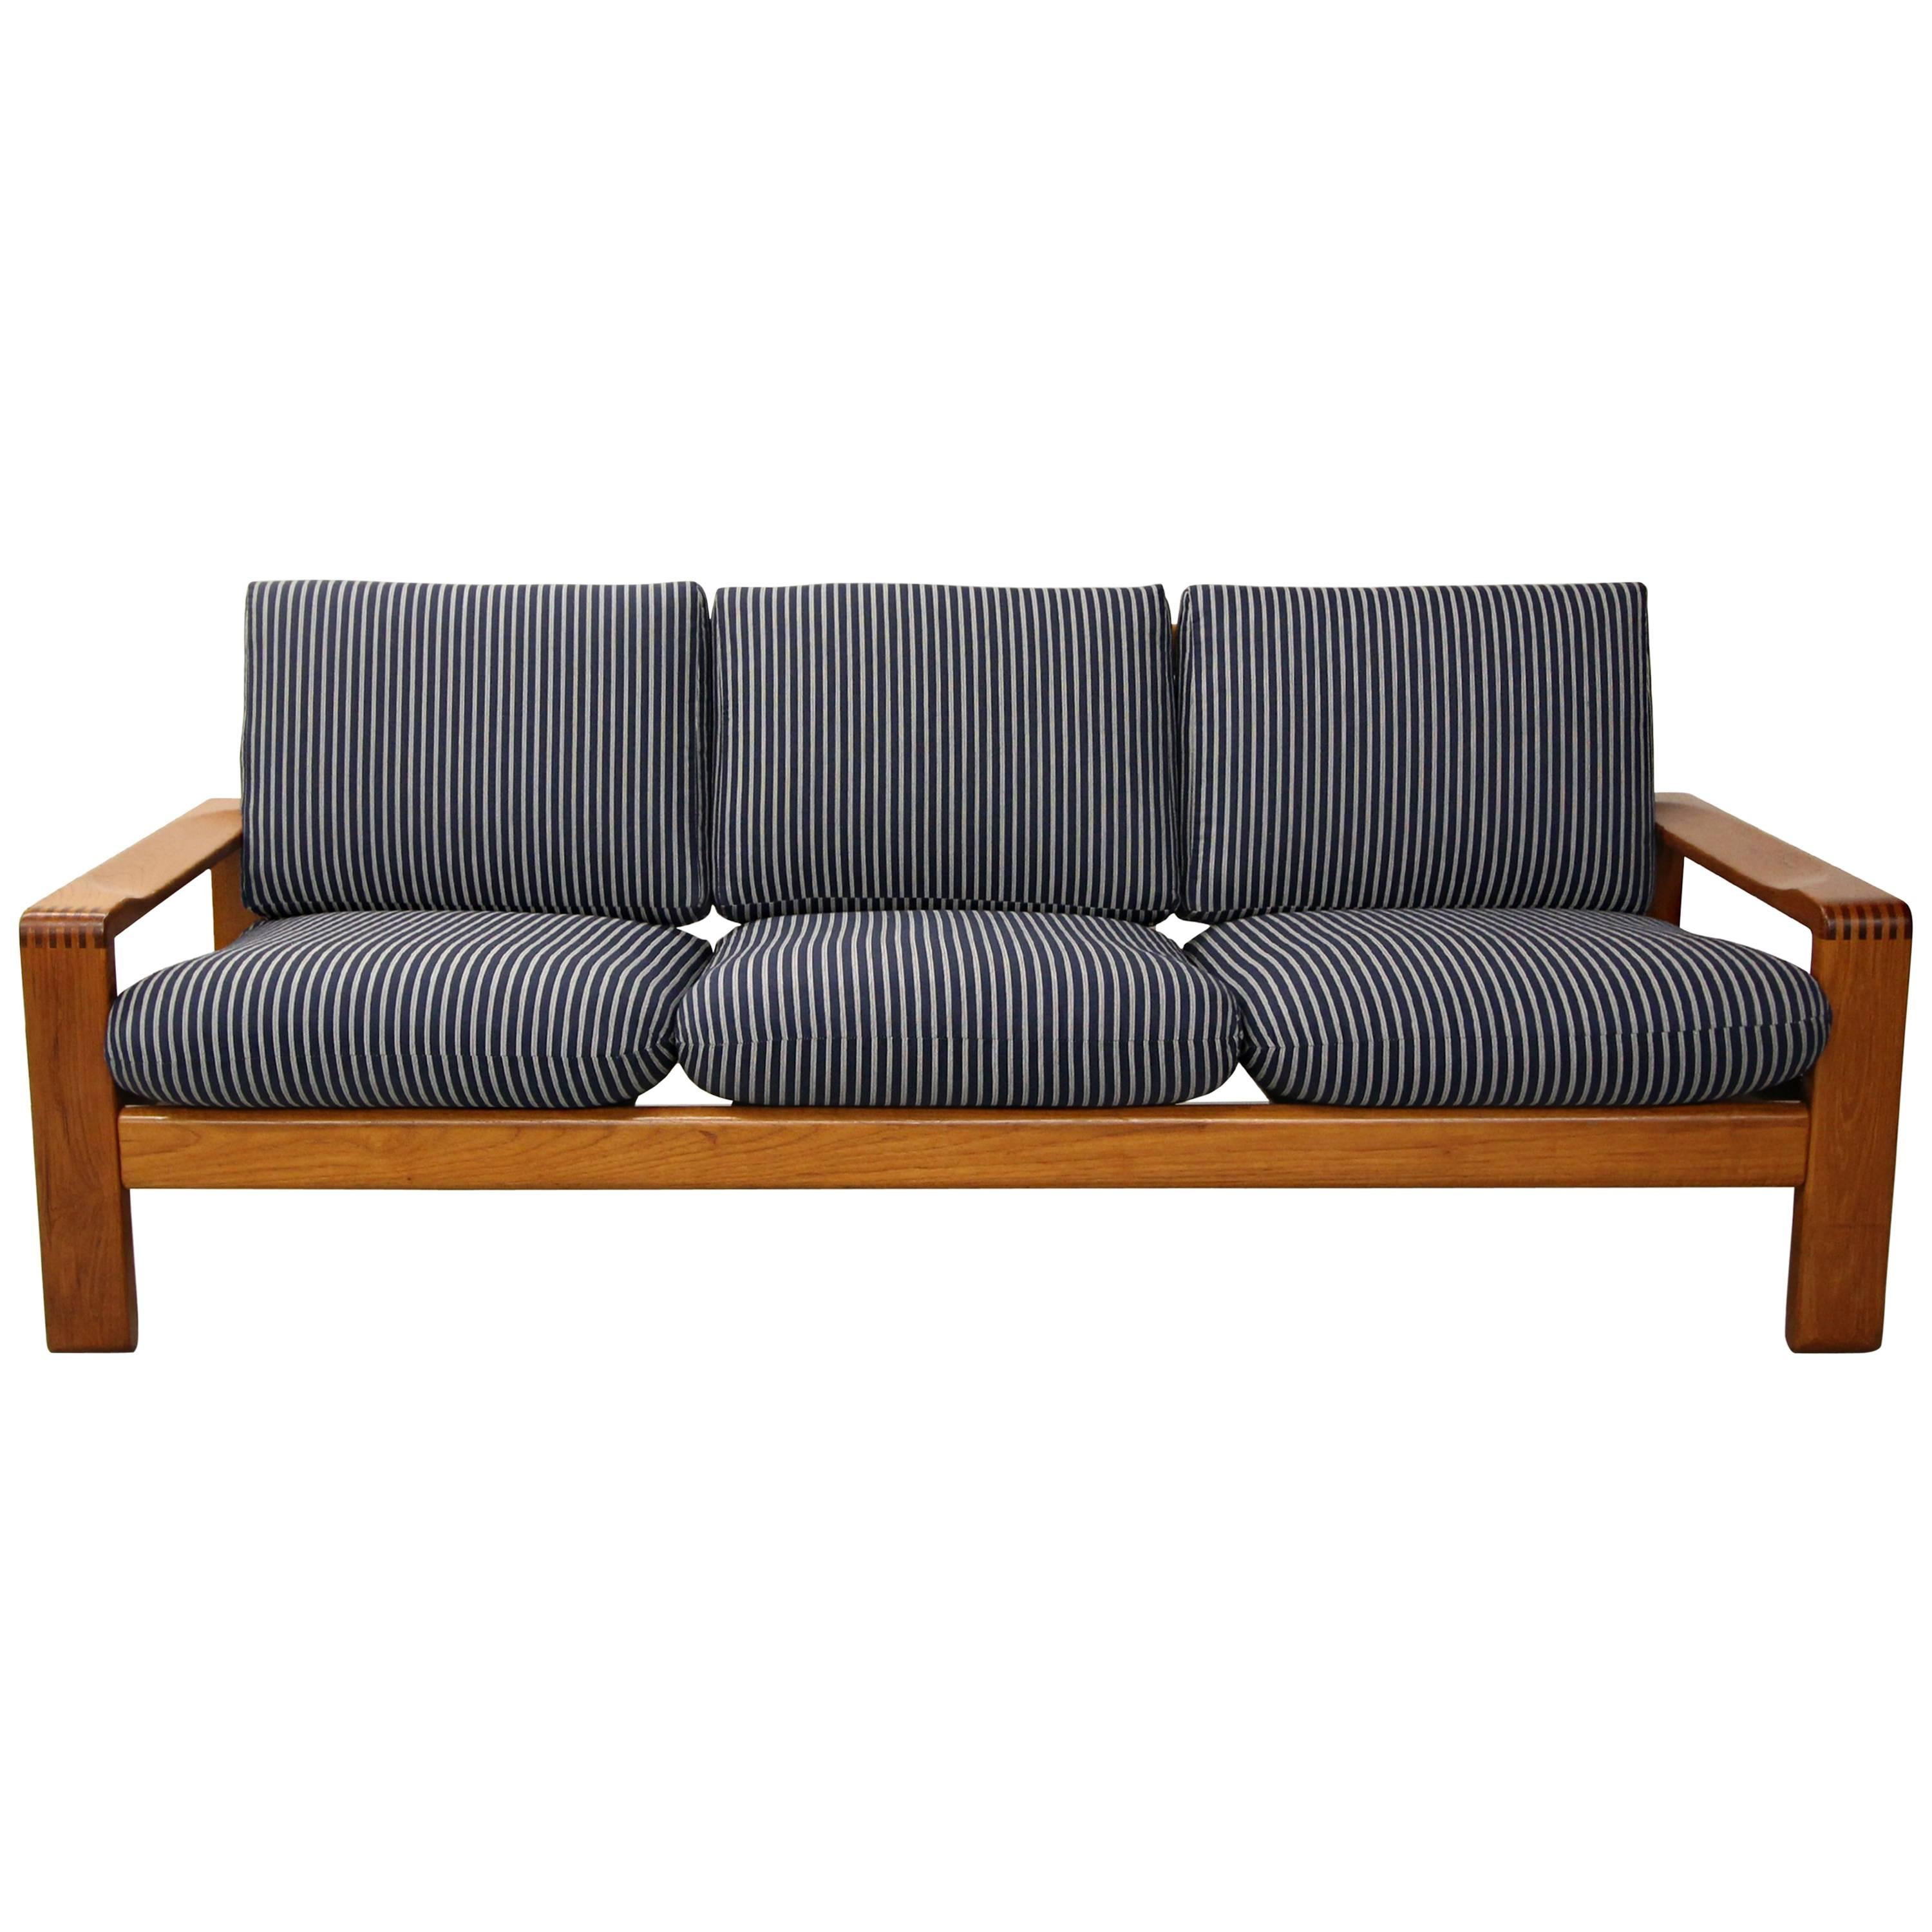 Solid Danish Teak Slat-Back Sofa by HW Klein for Bramin Mobler